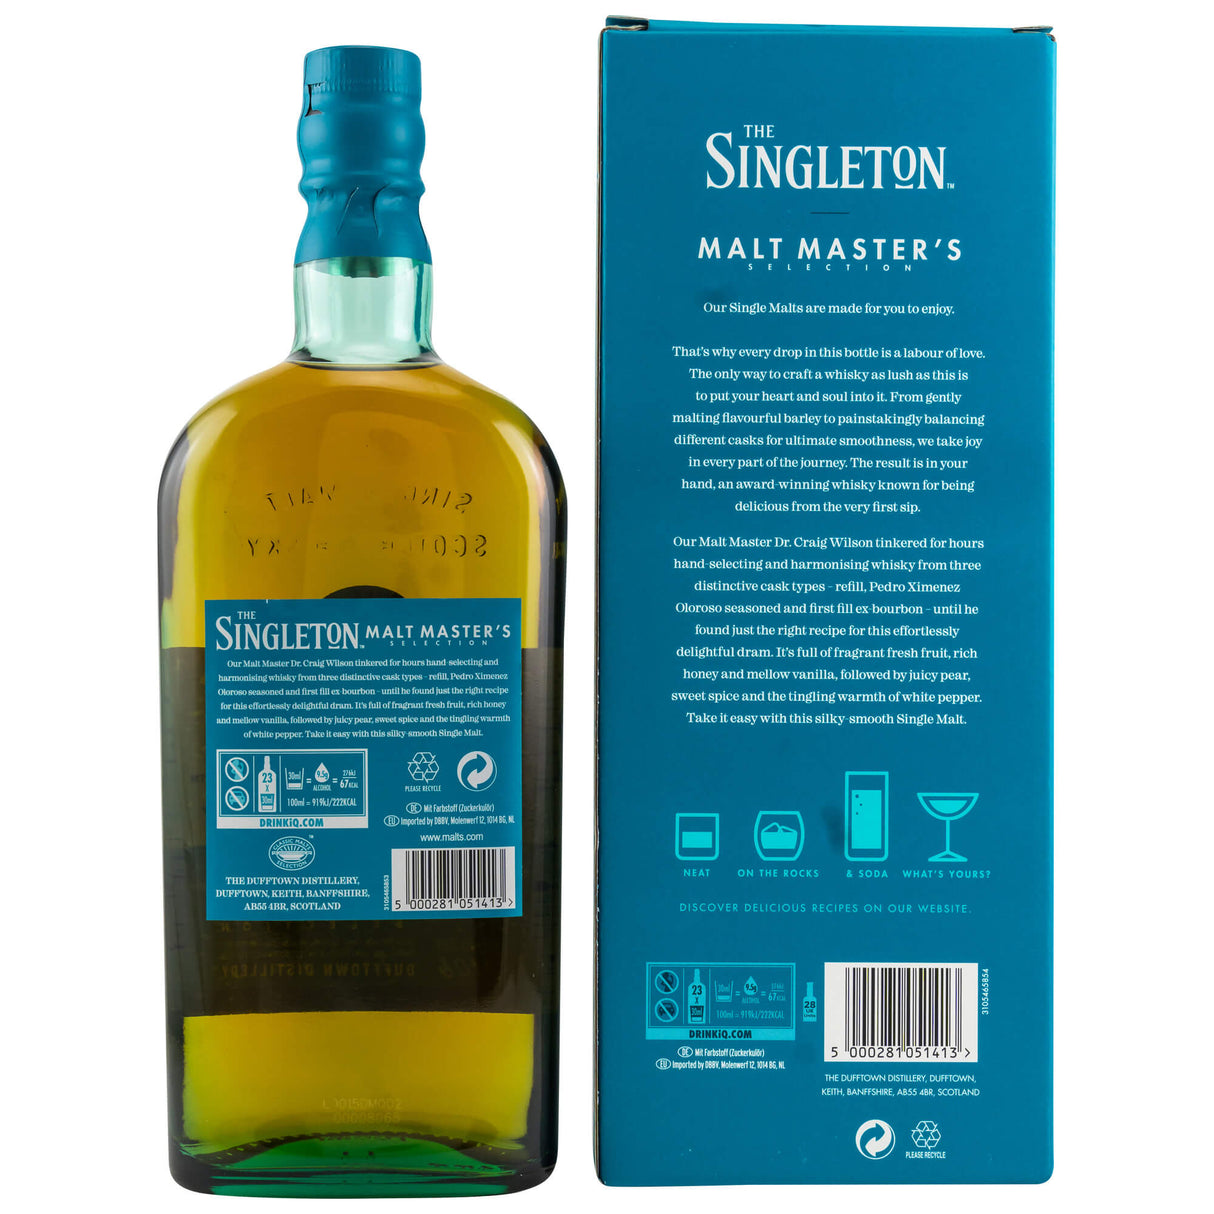 The Singleton of Dufftown Malt Masters Selection